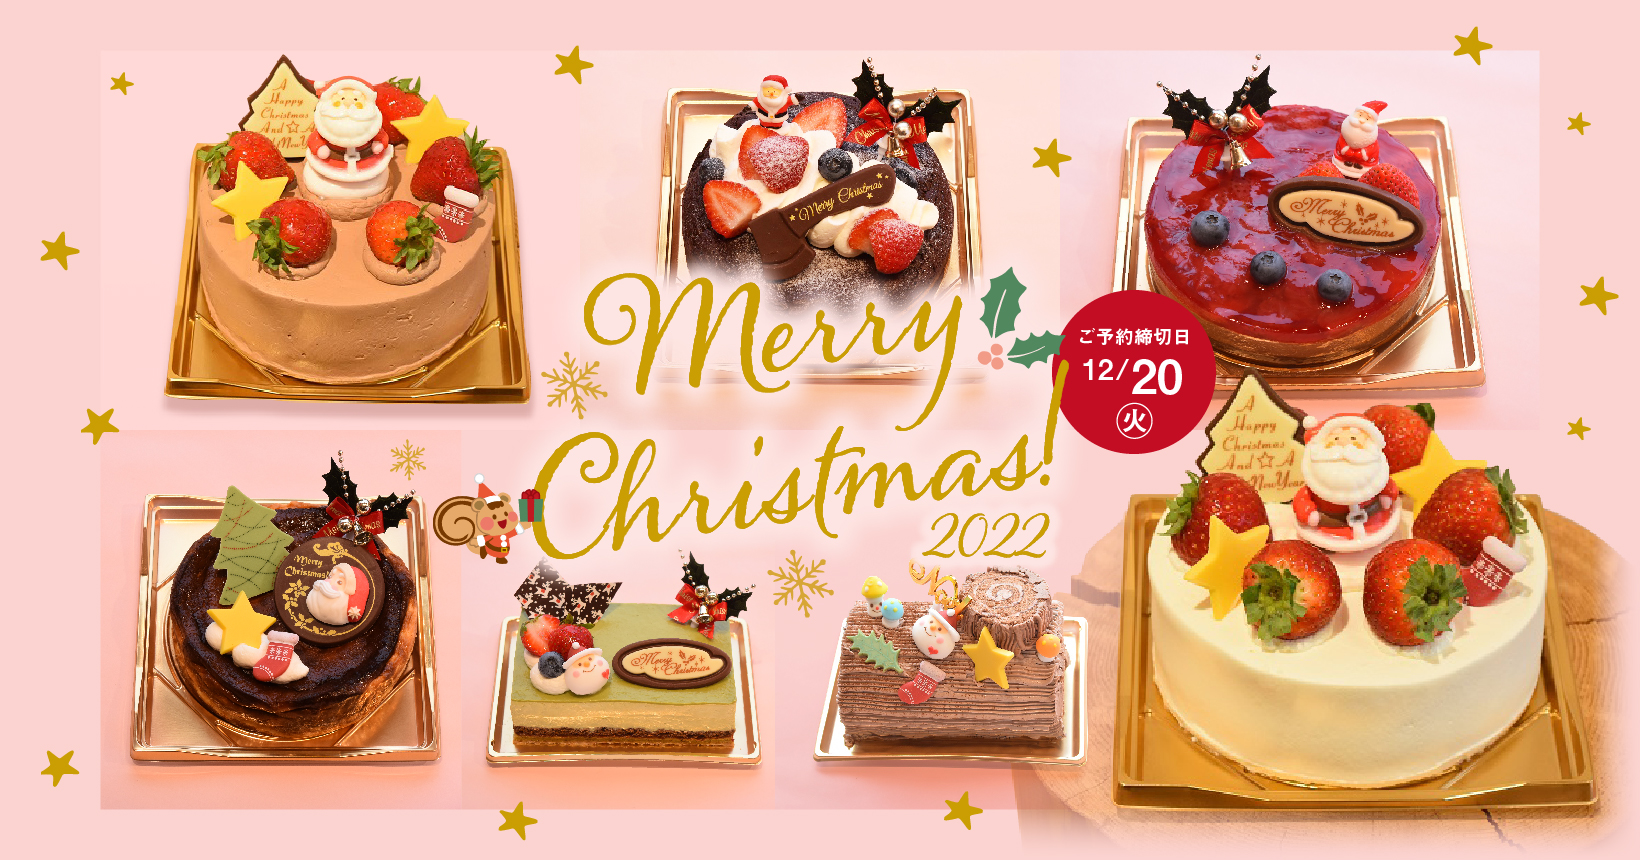 Merry Christmas 2022 ご予約締切日12/20(火)